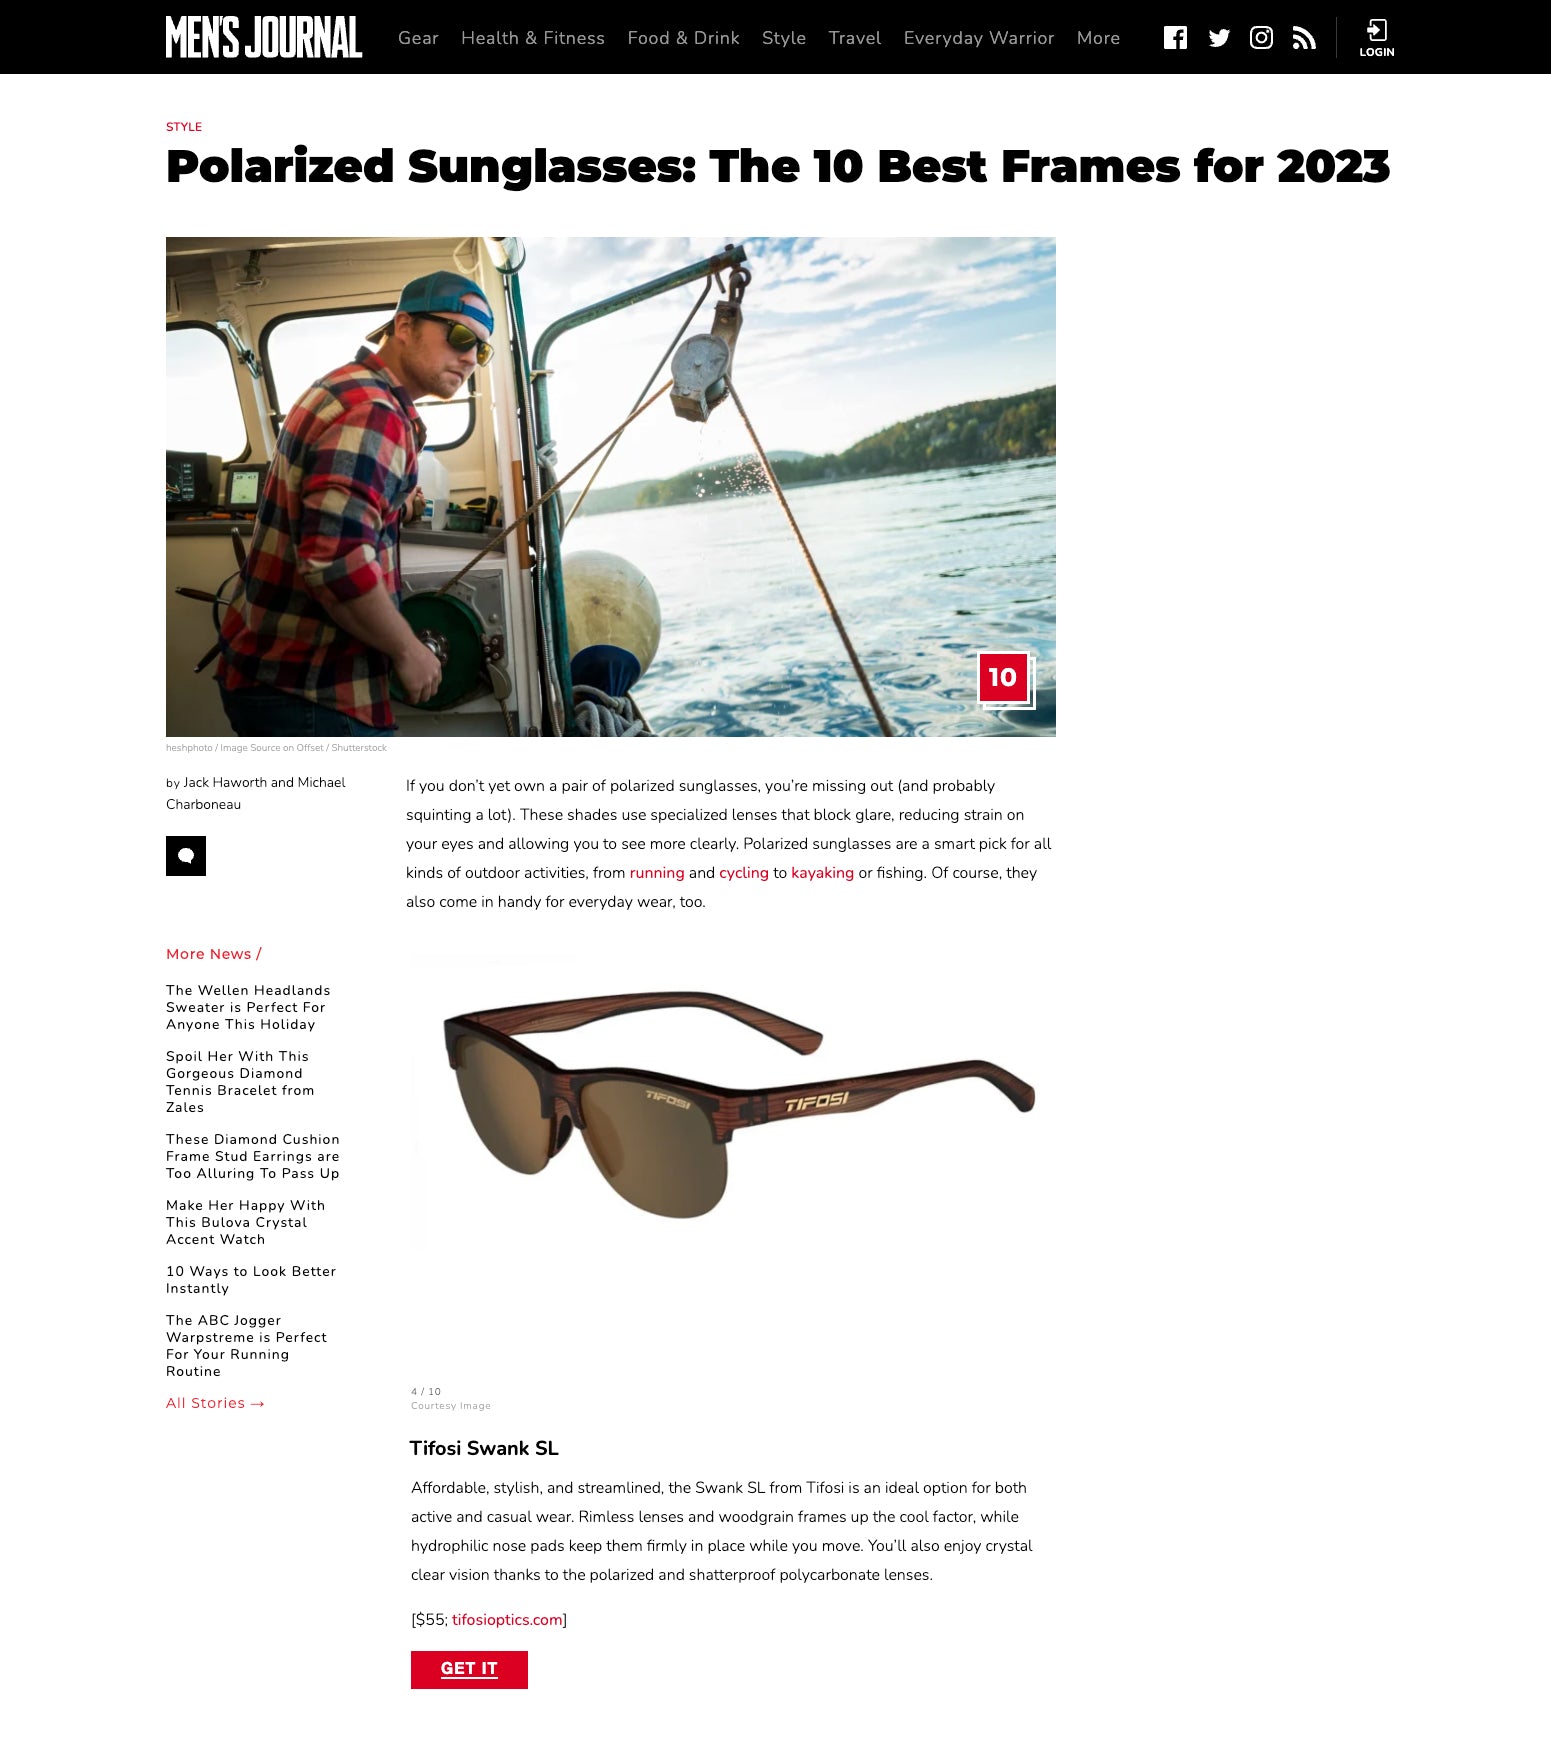 Tifosi Swank XL Sunglasses - Mens Journal January 2023